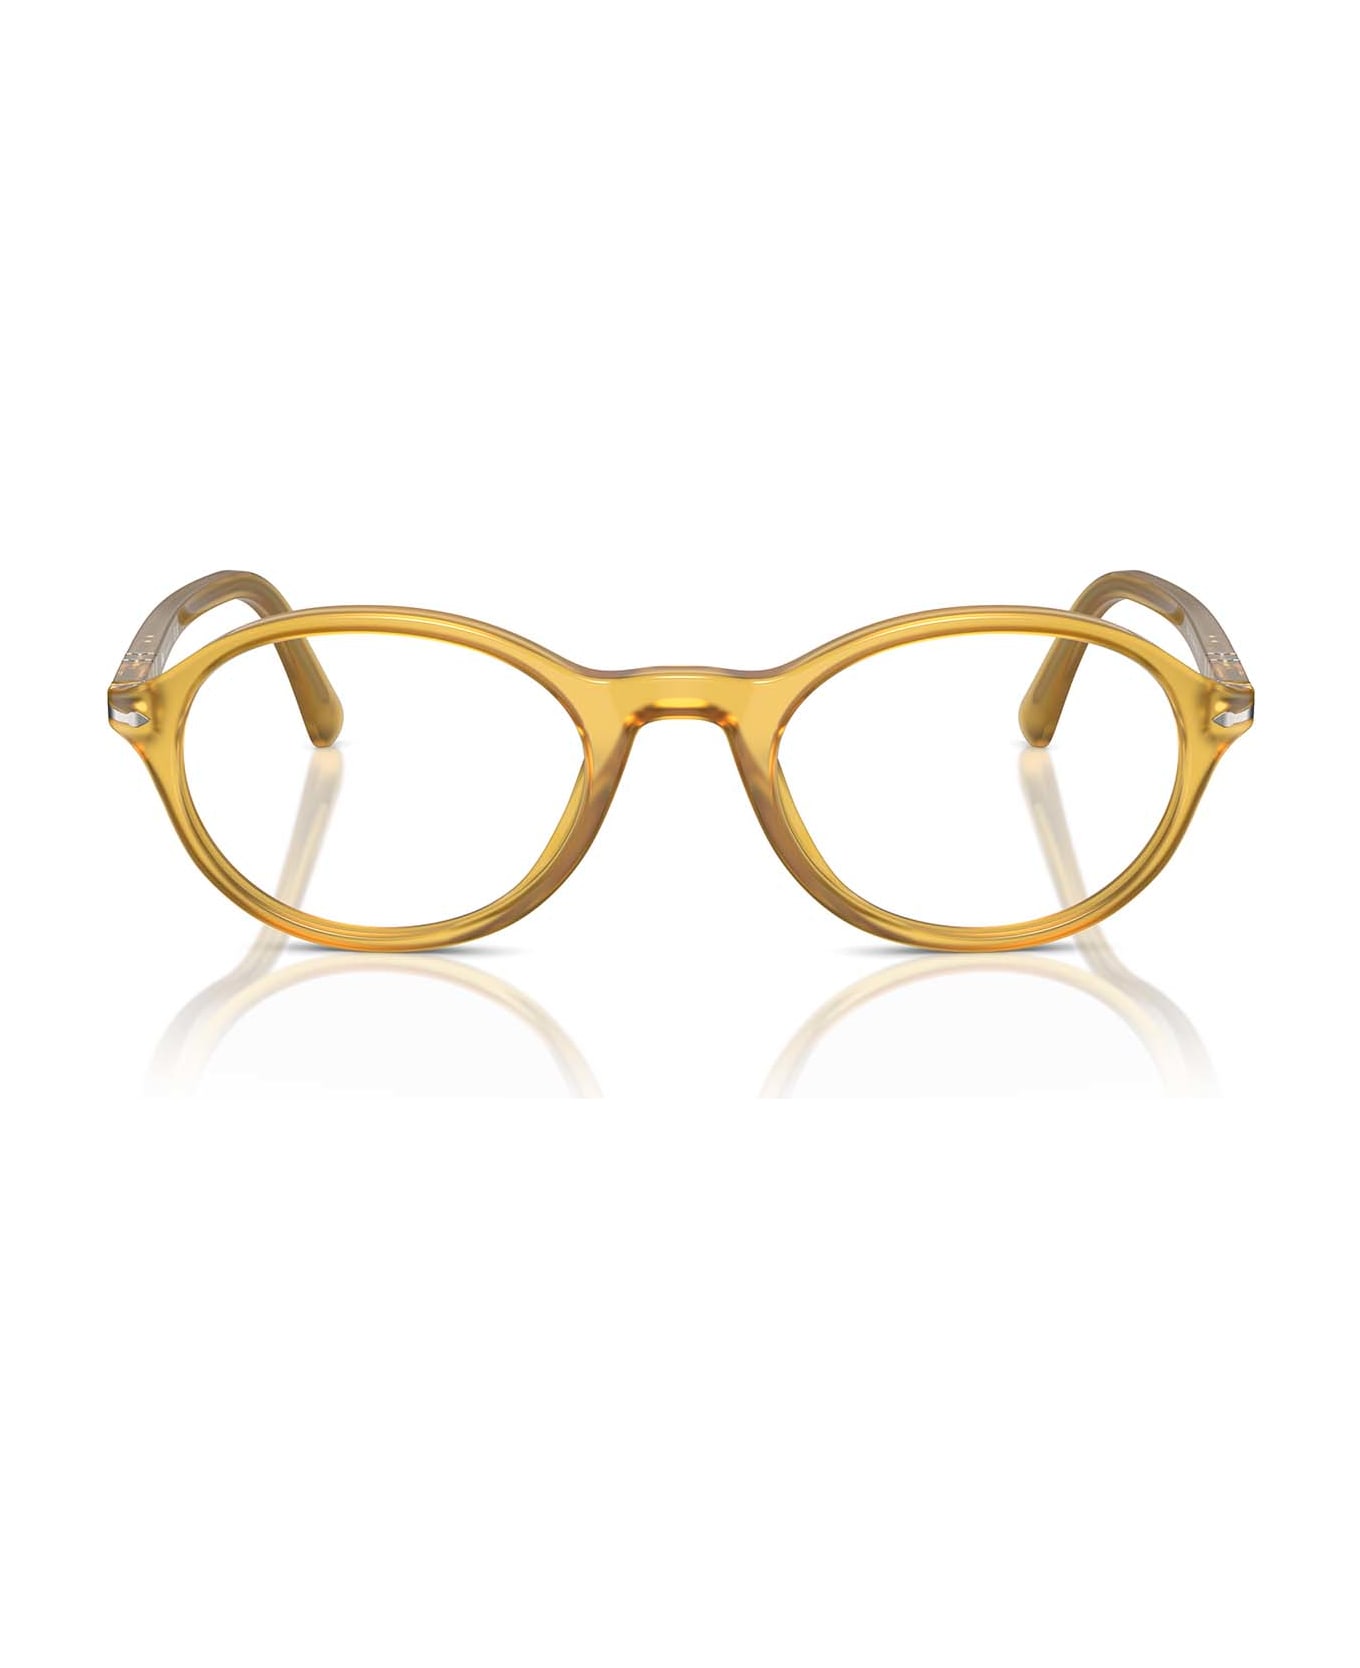 Persol Po3351v Miele Glasses - Miele